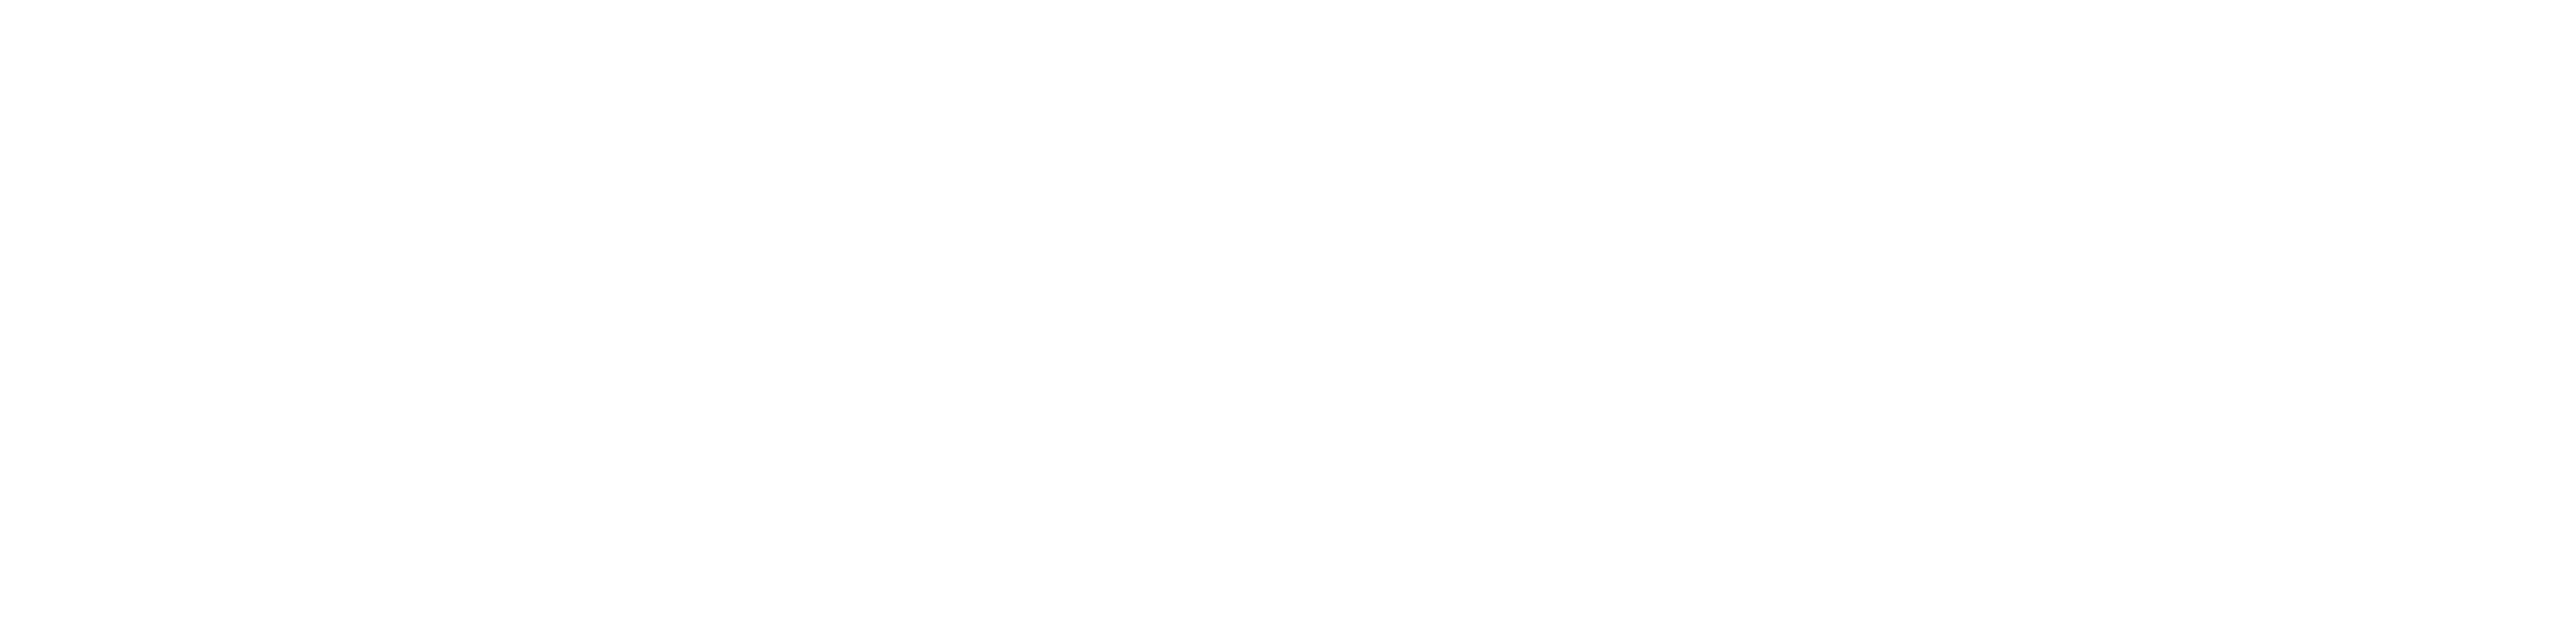 E3 Alliance Logo